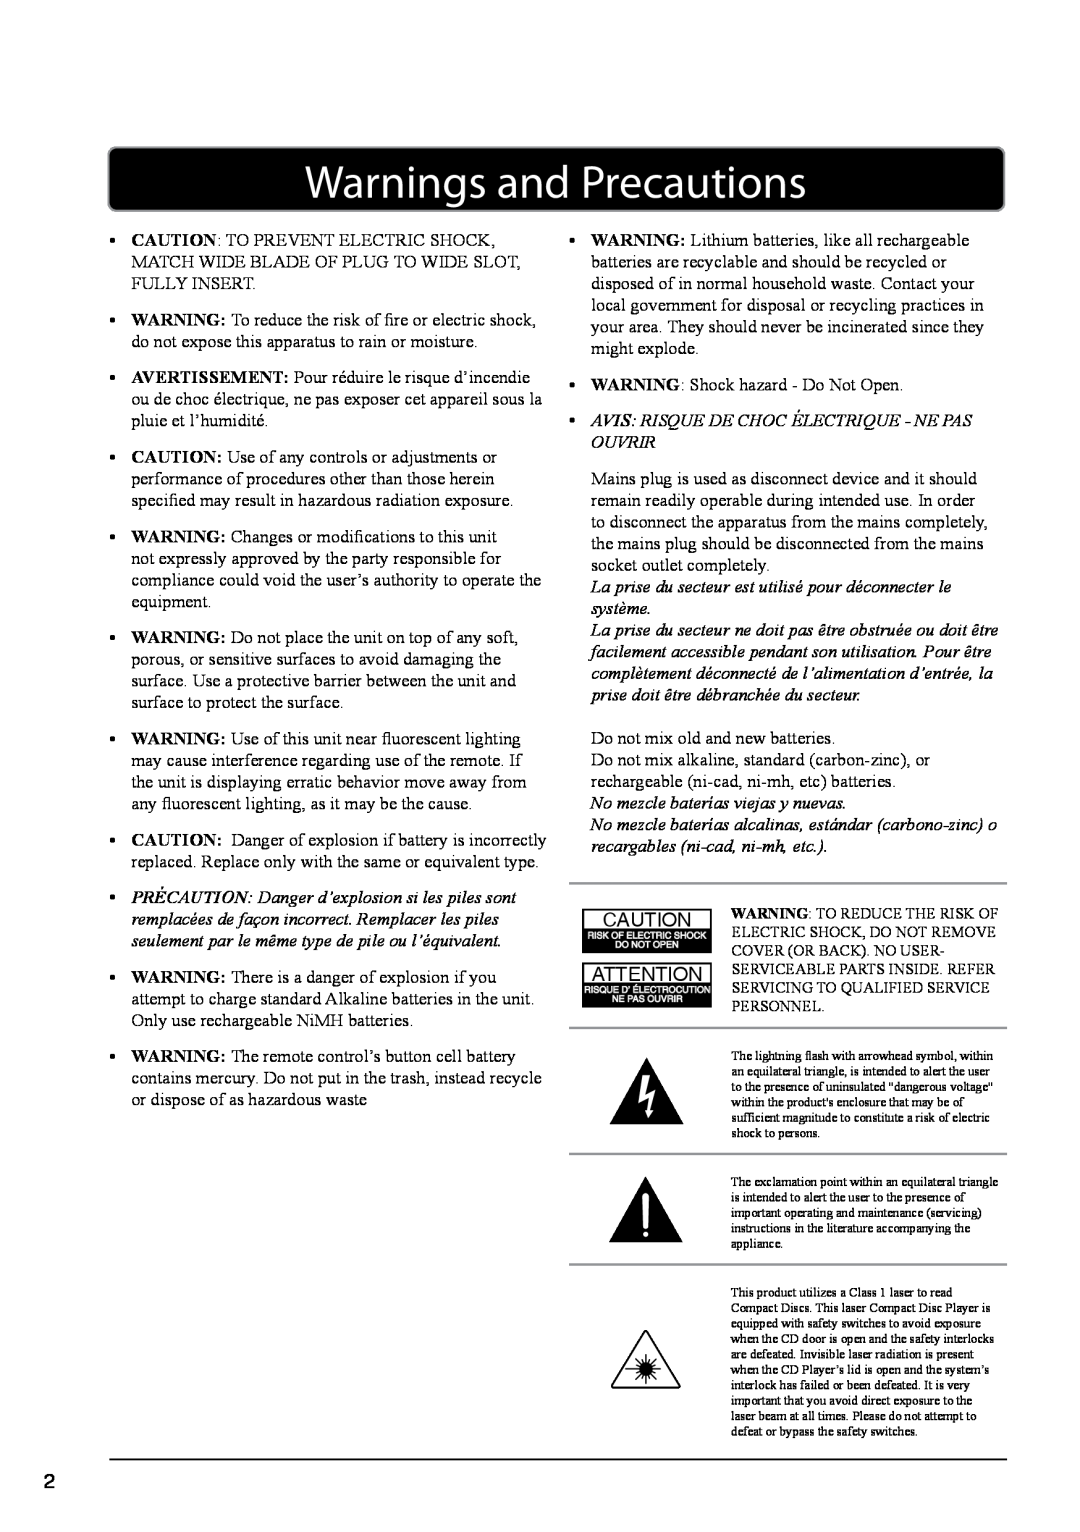 GPX HC221B manual Warnings and Precautions 